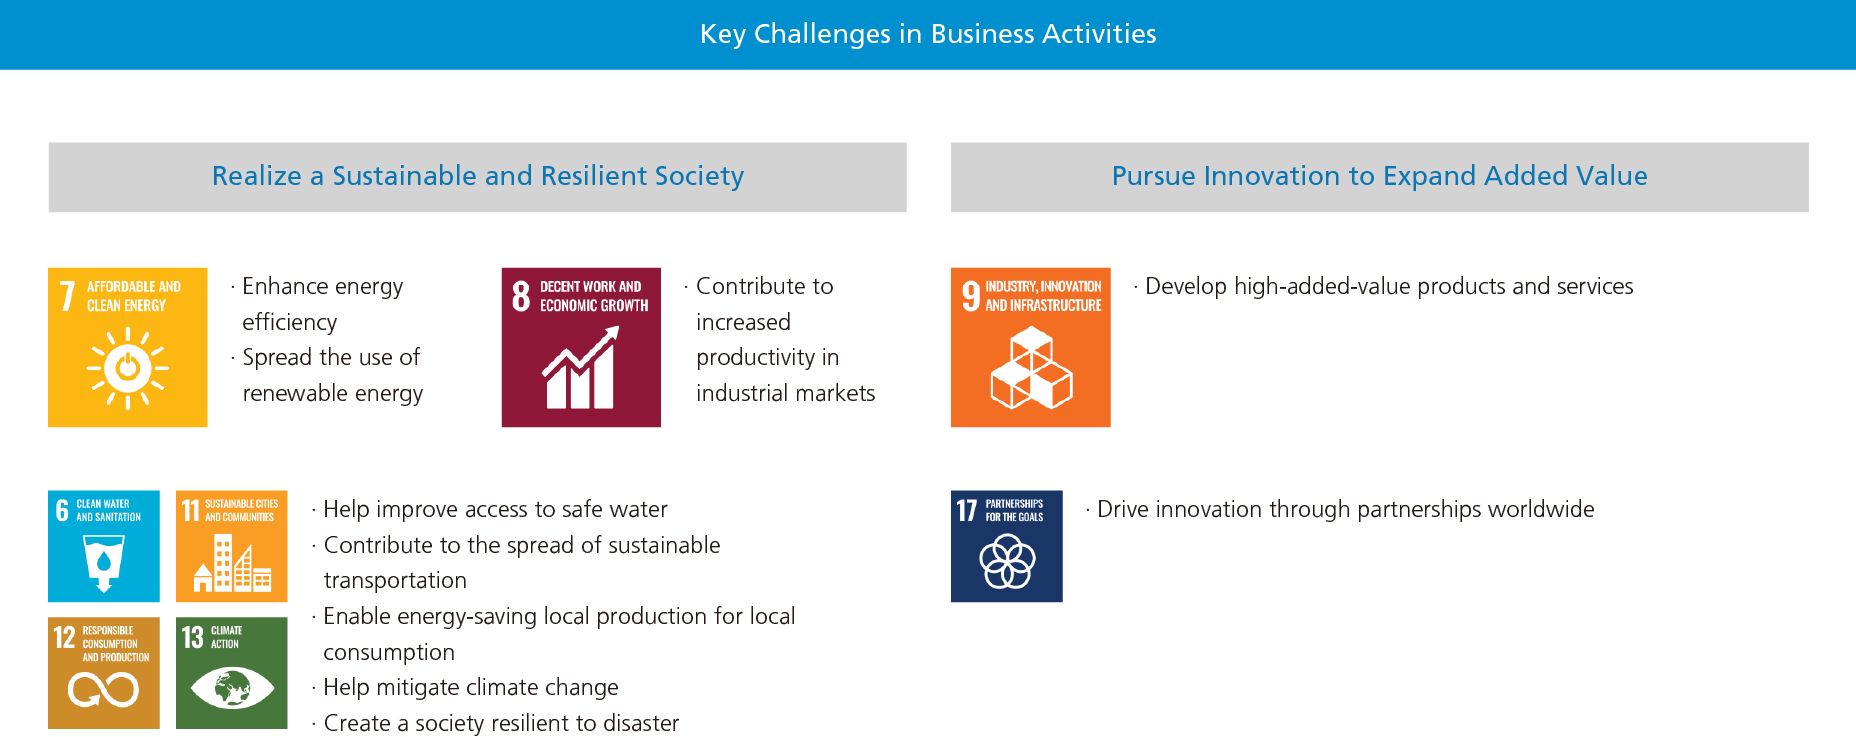 Key Challenges in Business Activities